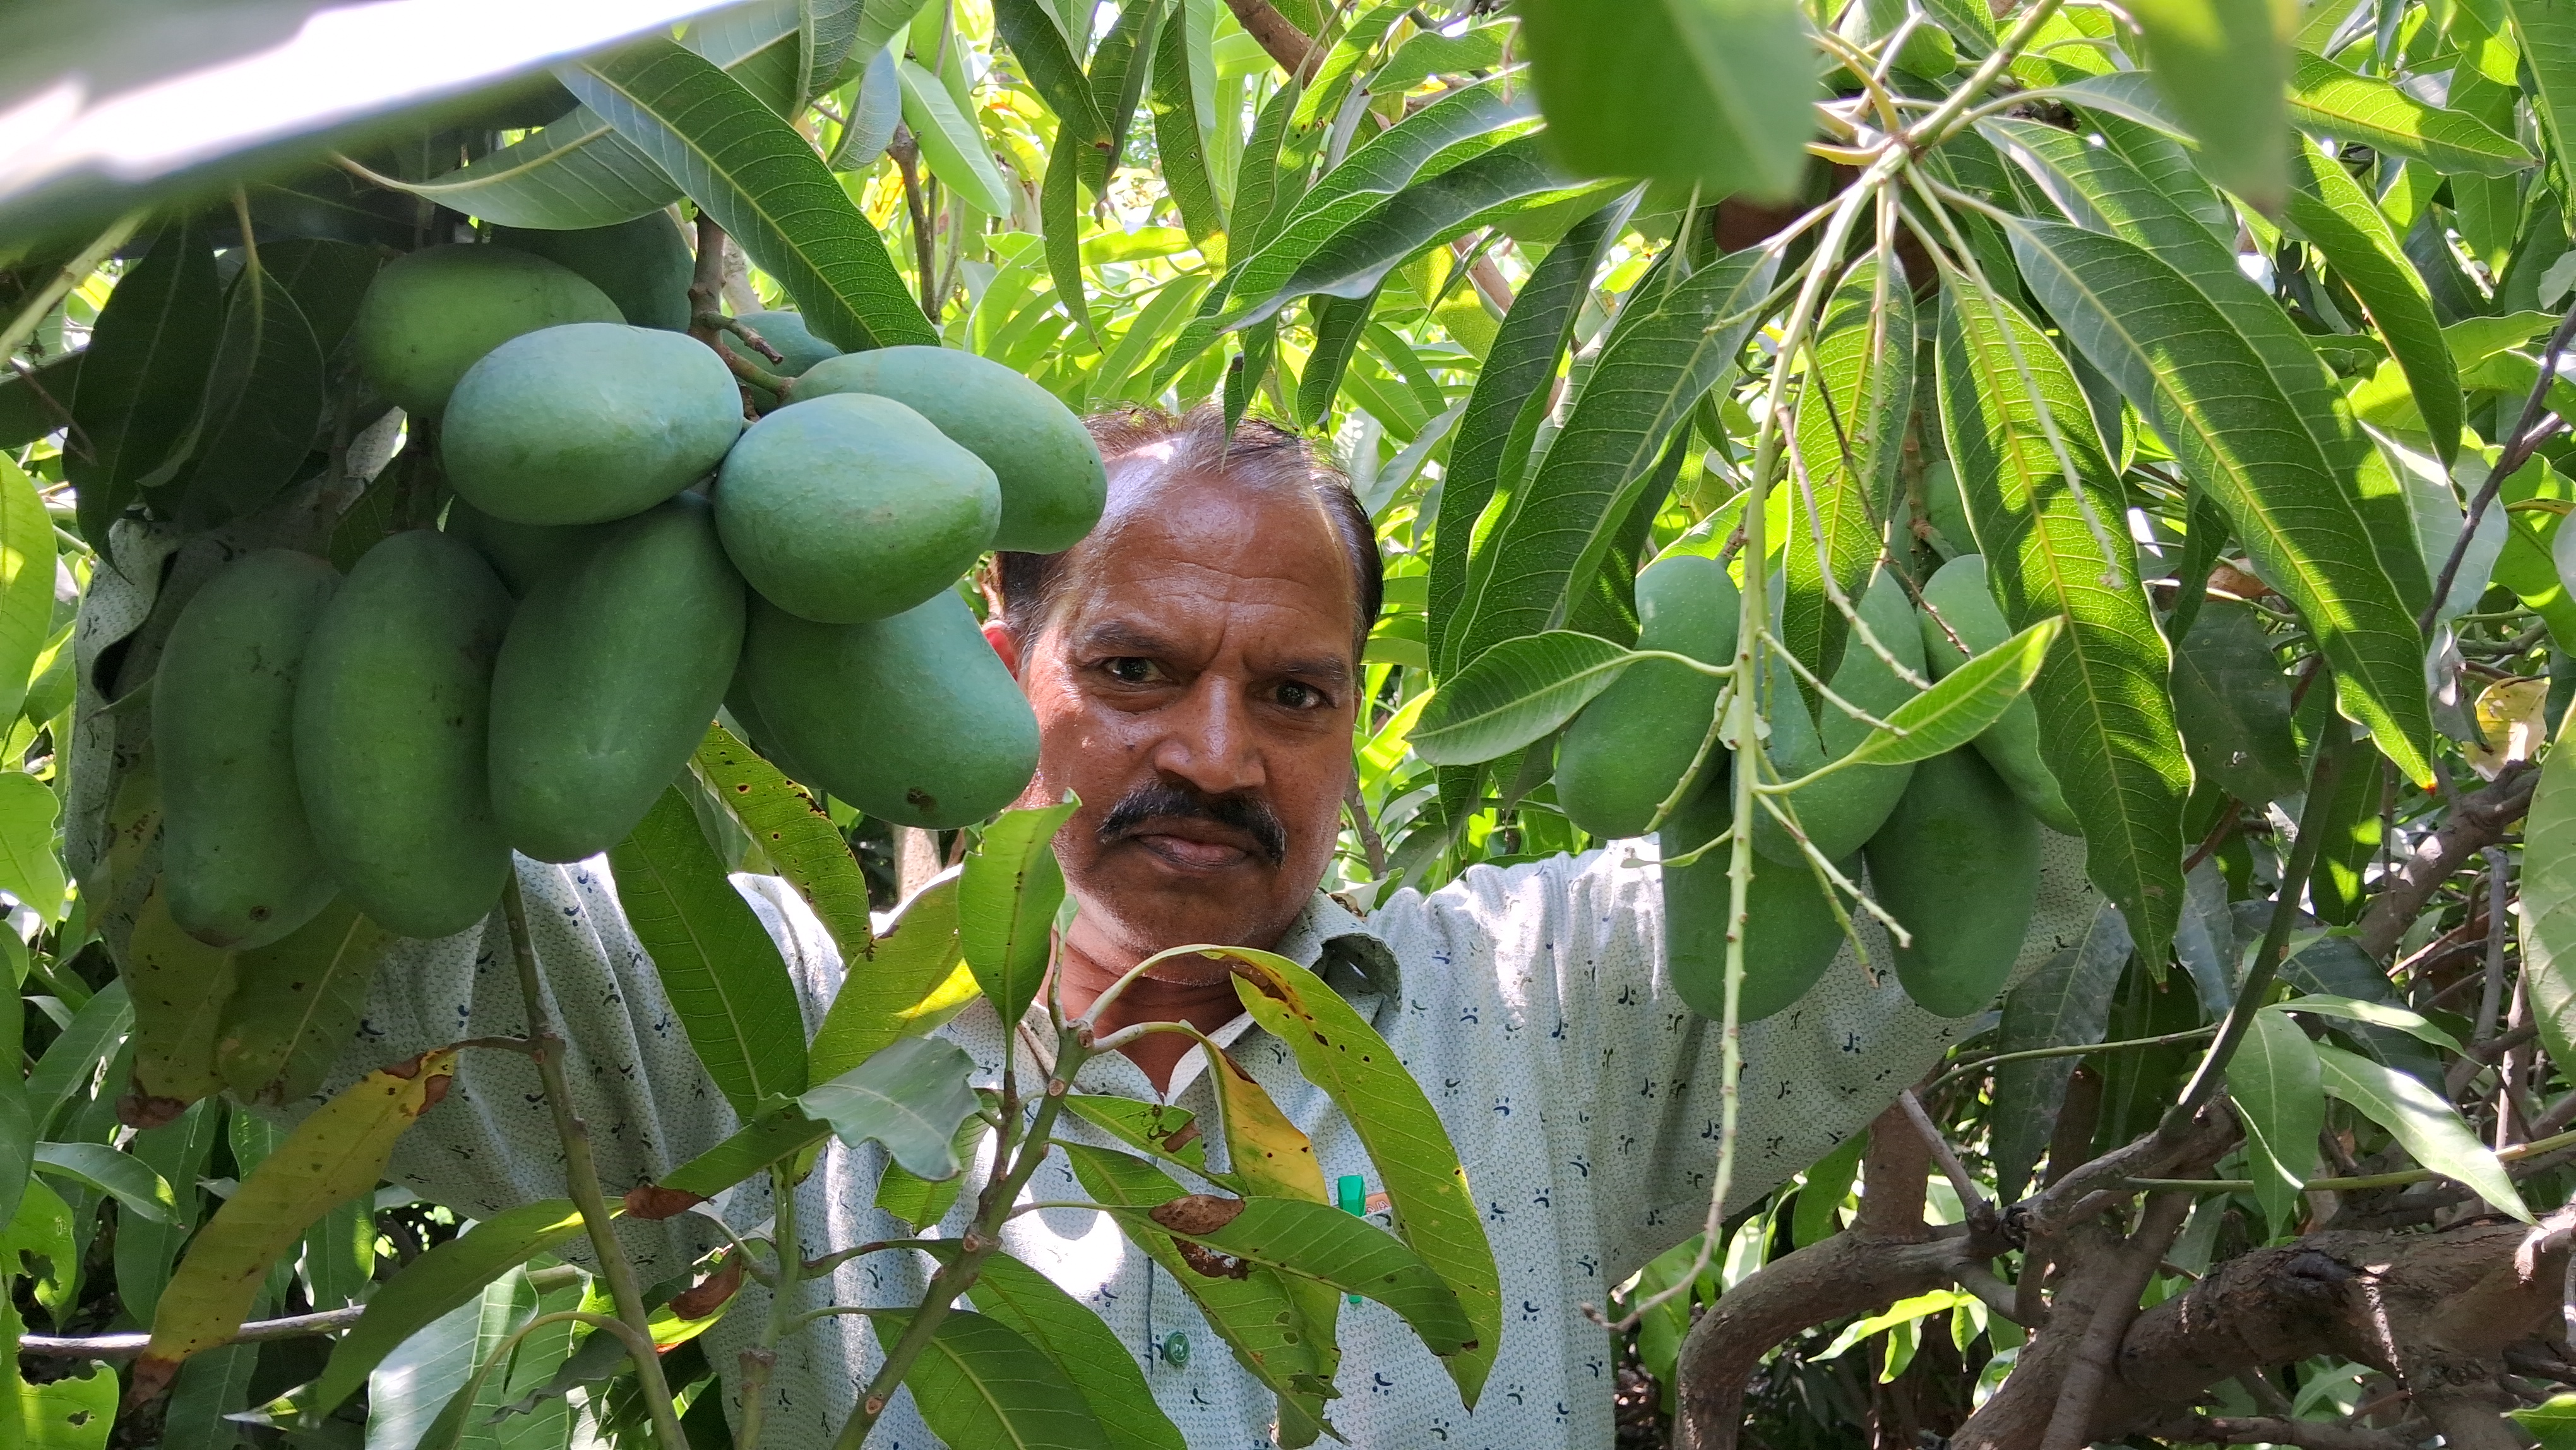 Special Mango Tree in Rajasthan